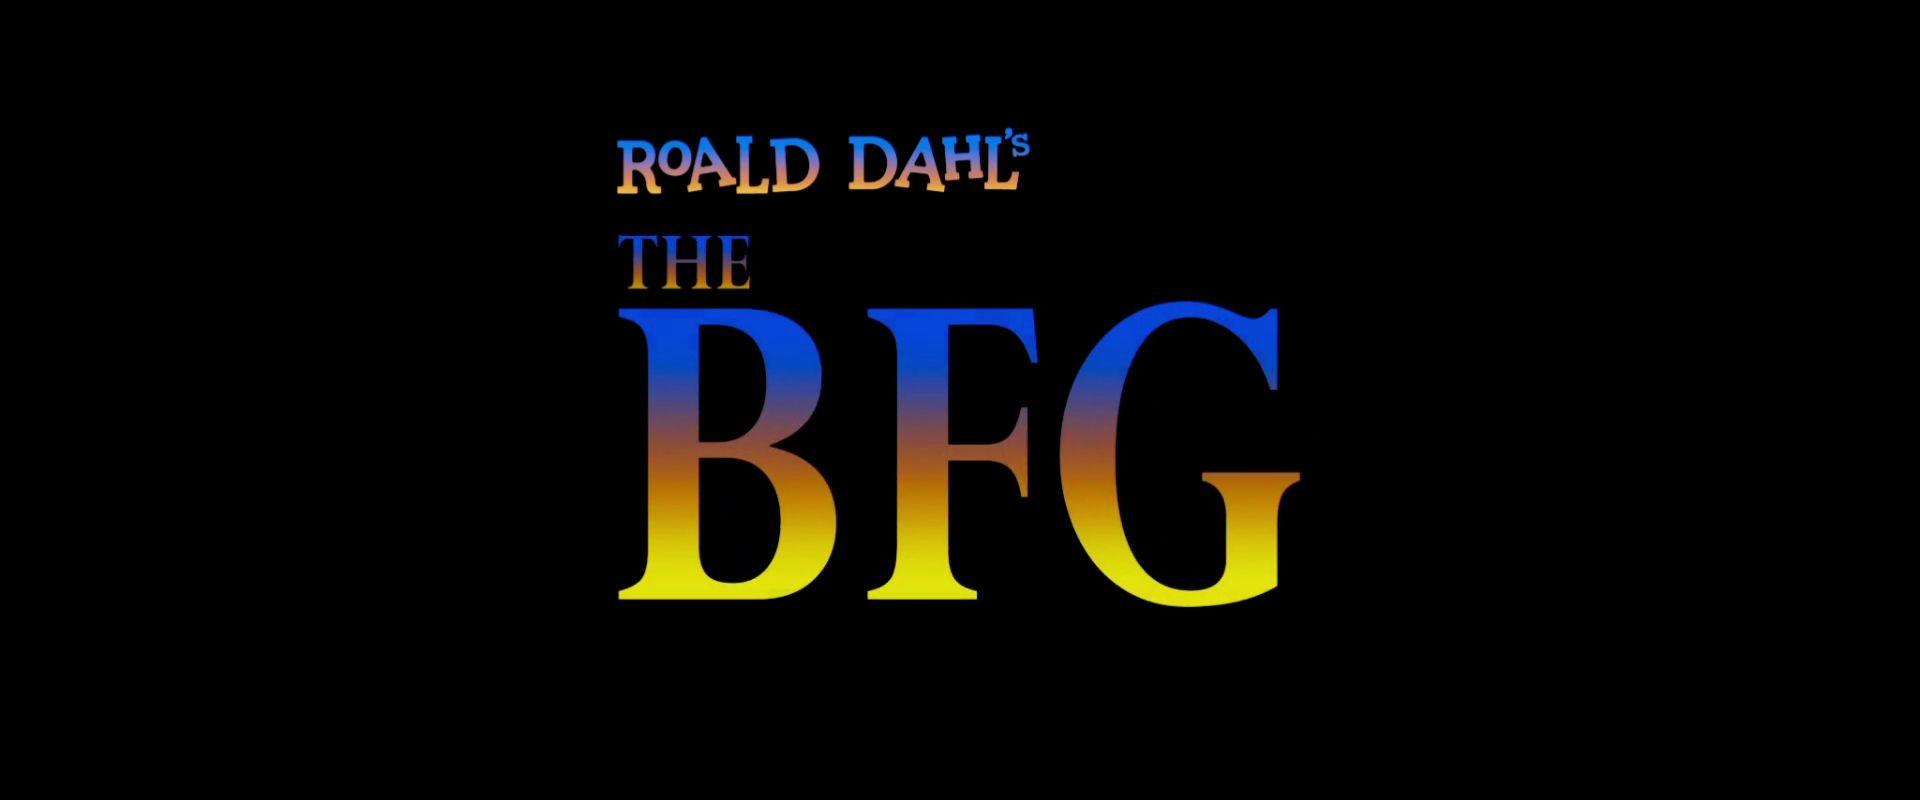 BFG Logo - Image - The BFG (2016) Logo.jpg | Film and Television Wikia | FANDOM ...